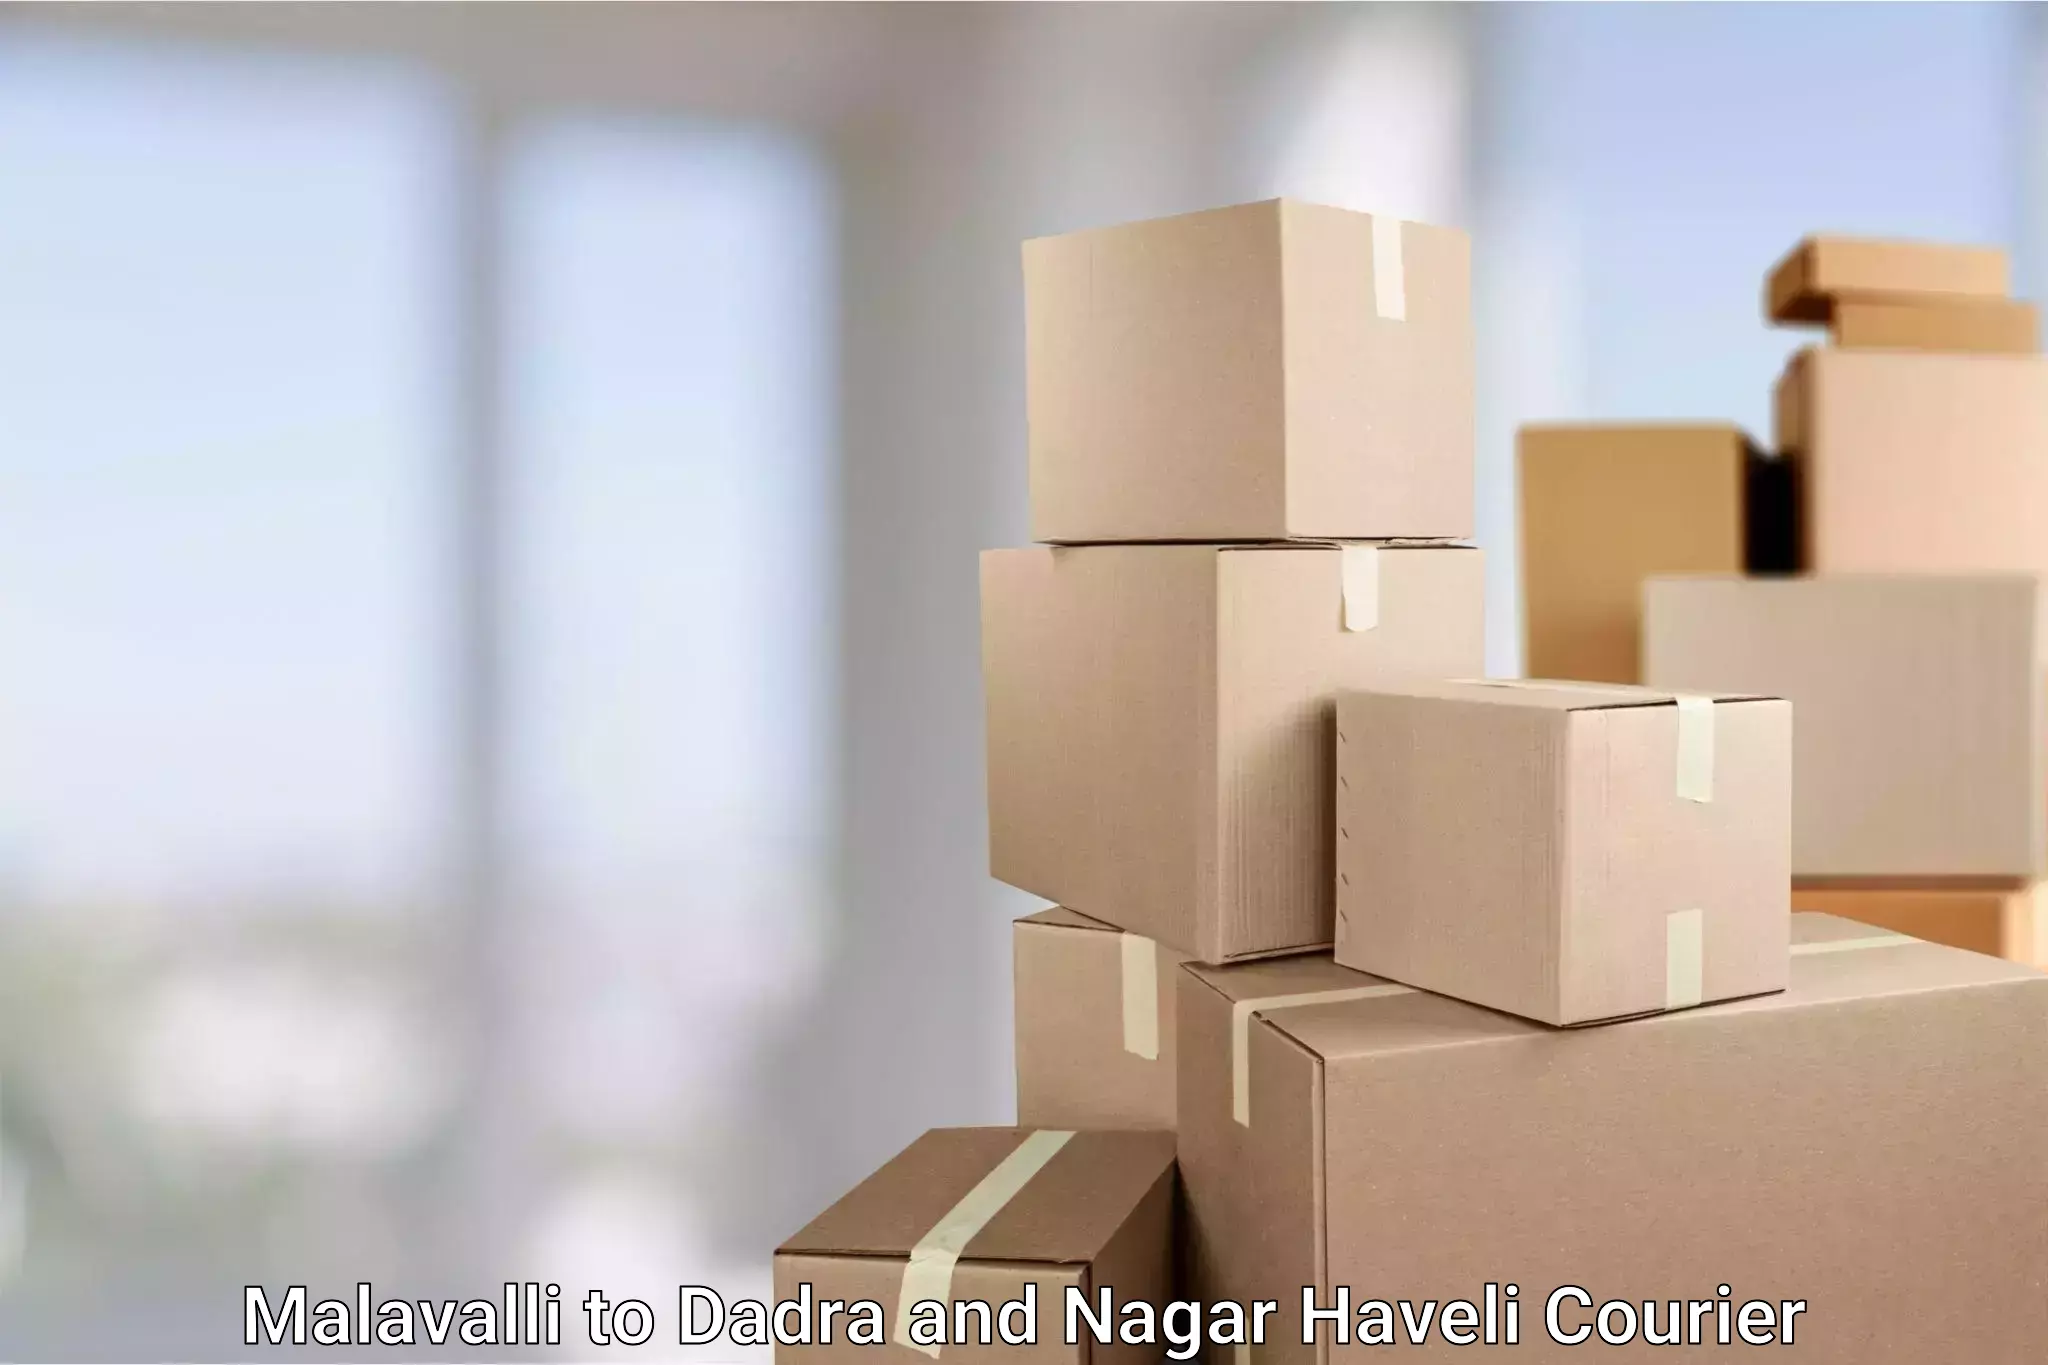 Global shipping networks Malavalli to Dadra and Nagar Haveli